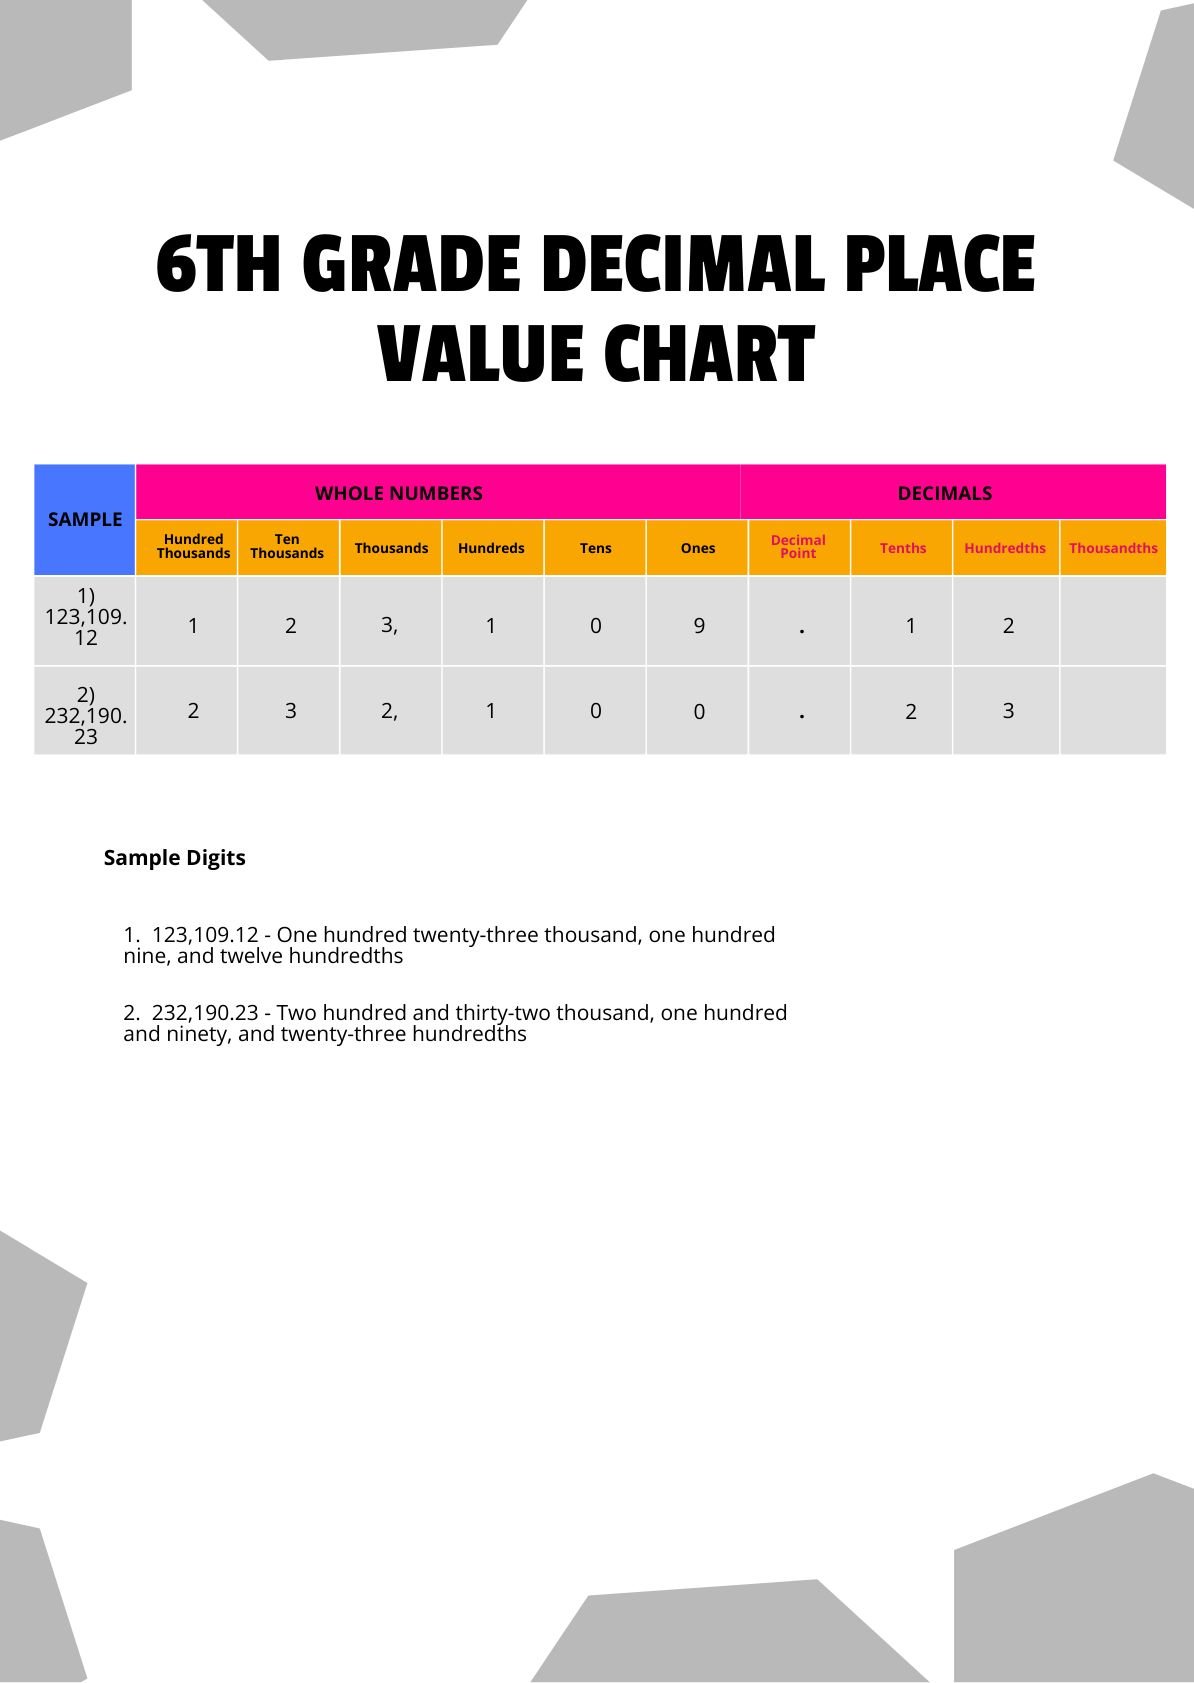 6th Grade Decimal Place Value Chart in PDF